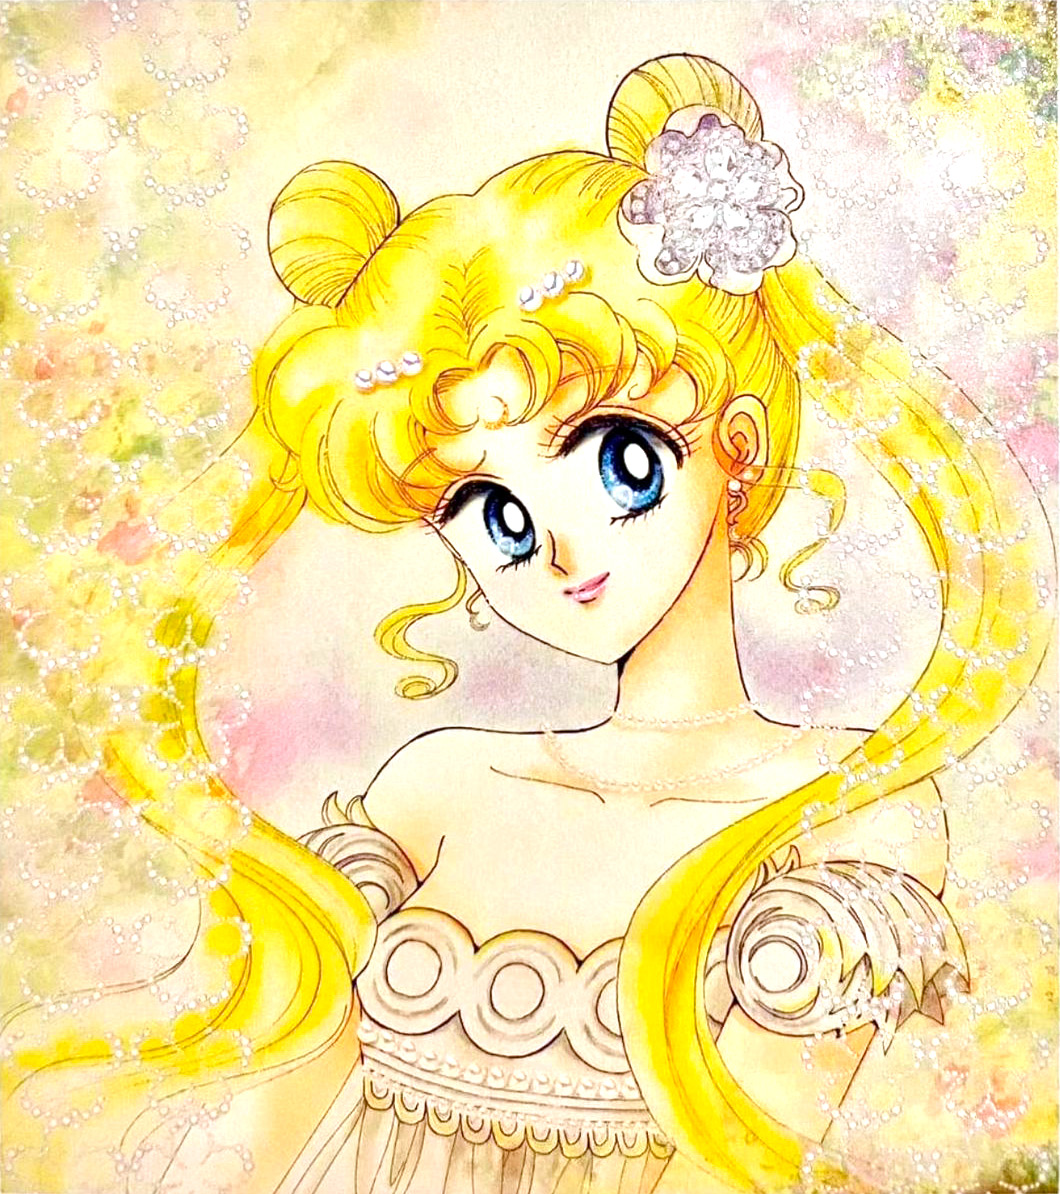 New art from the Sailor Moon Raisonné Art Works #SailorMoon #セーラームーン